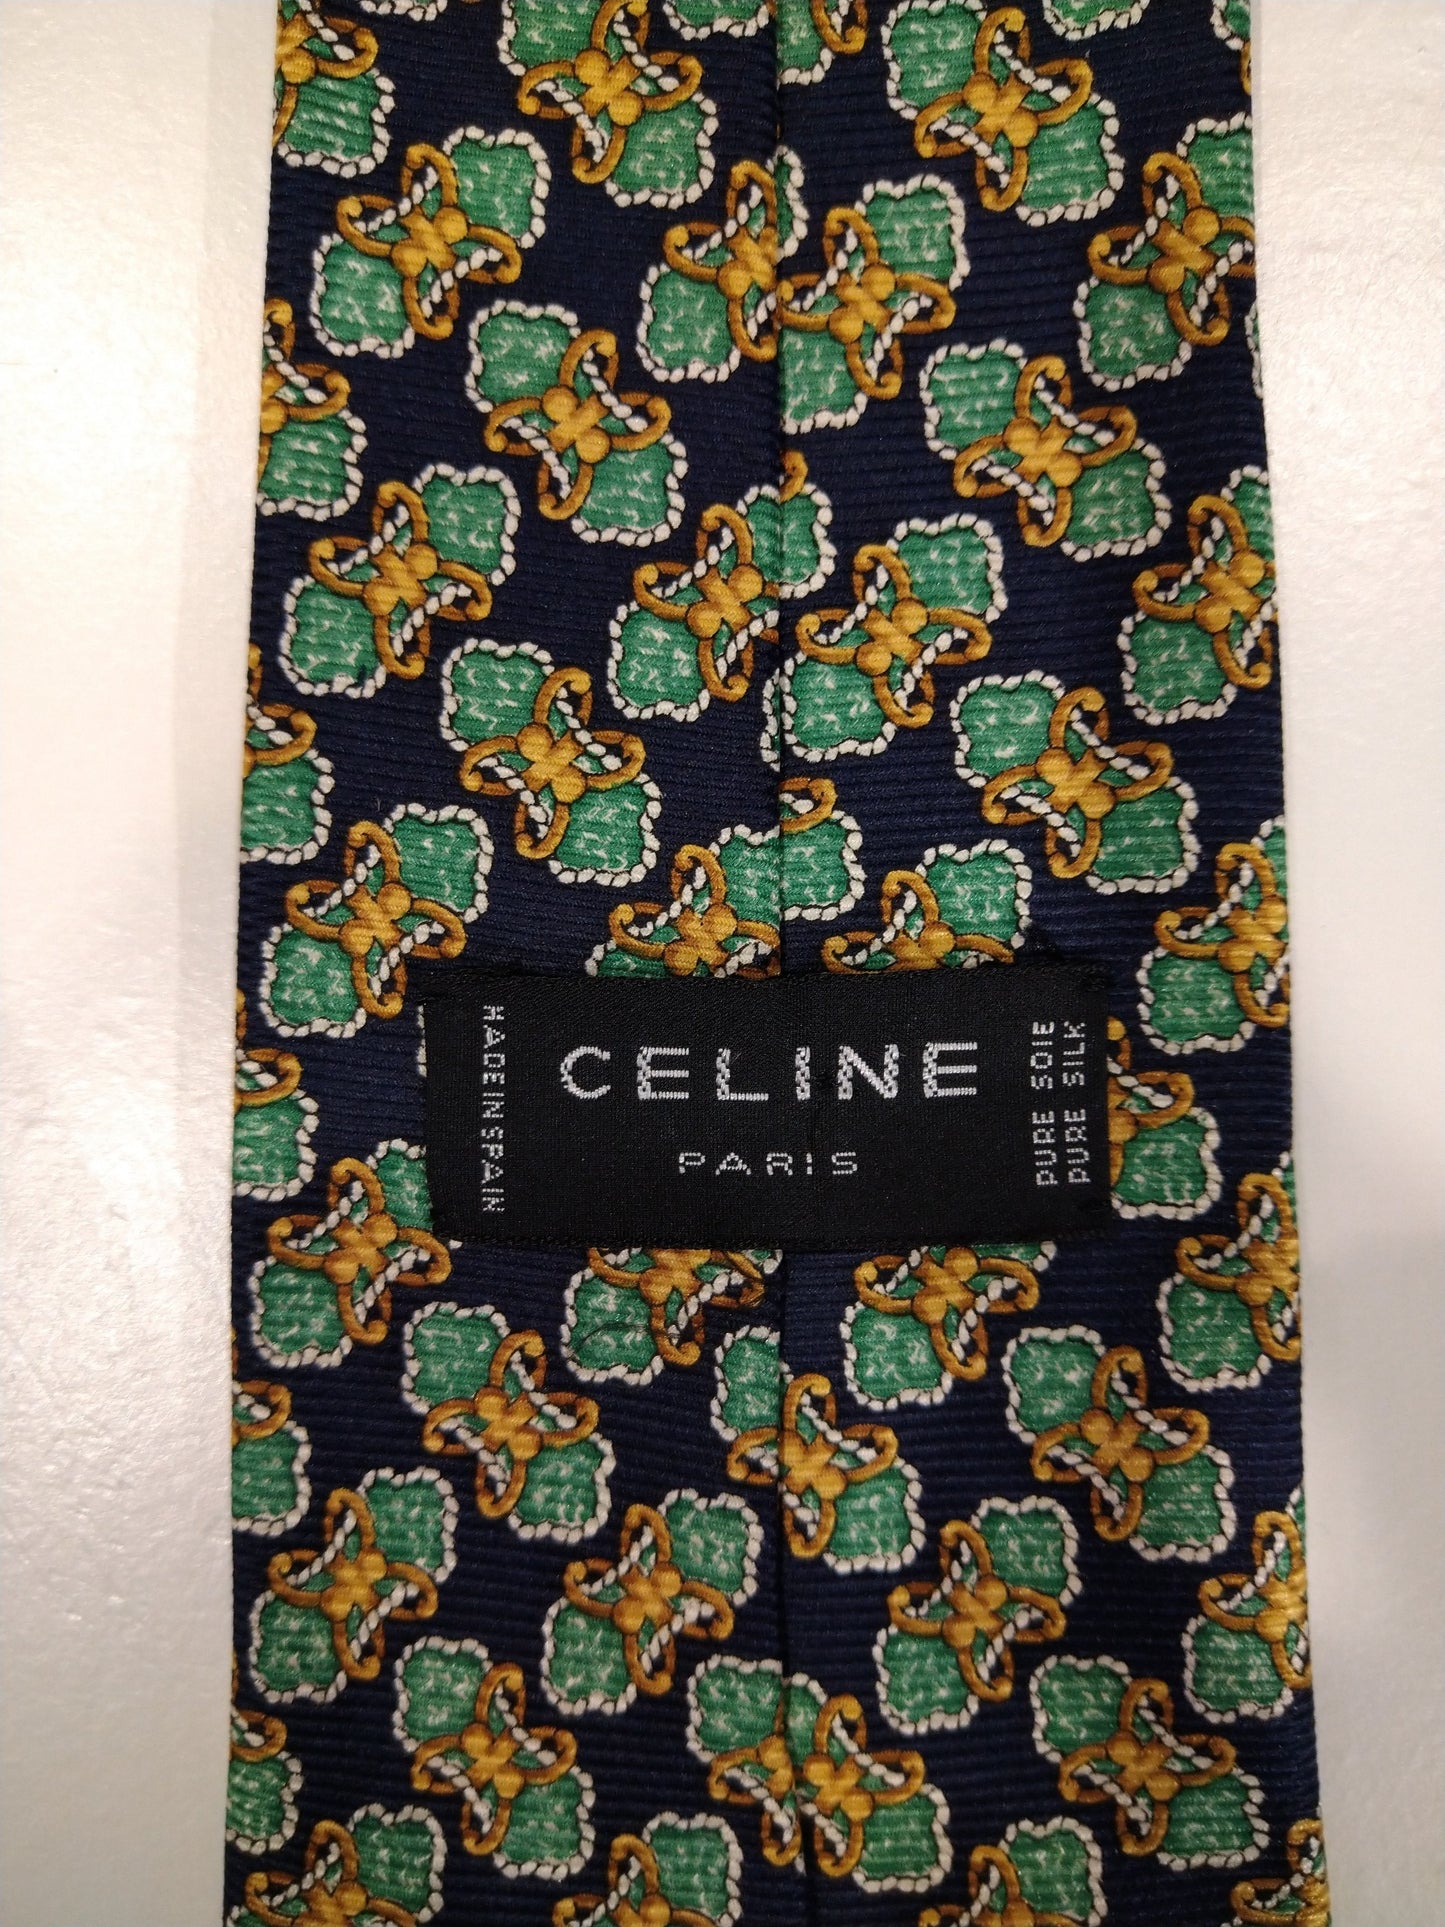 Celine Paris silk tie. Green blue yellow motif.